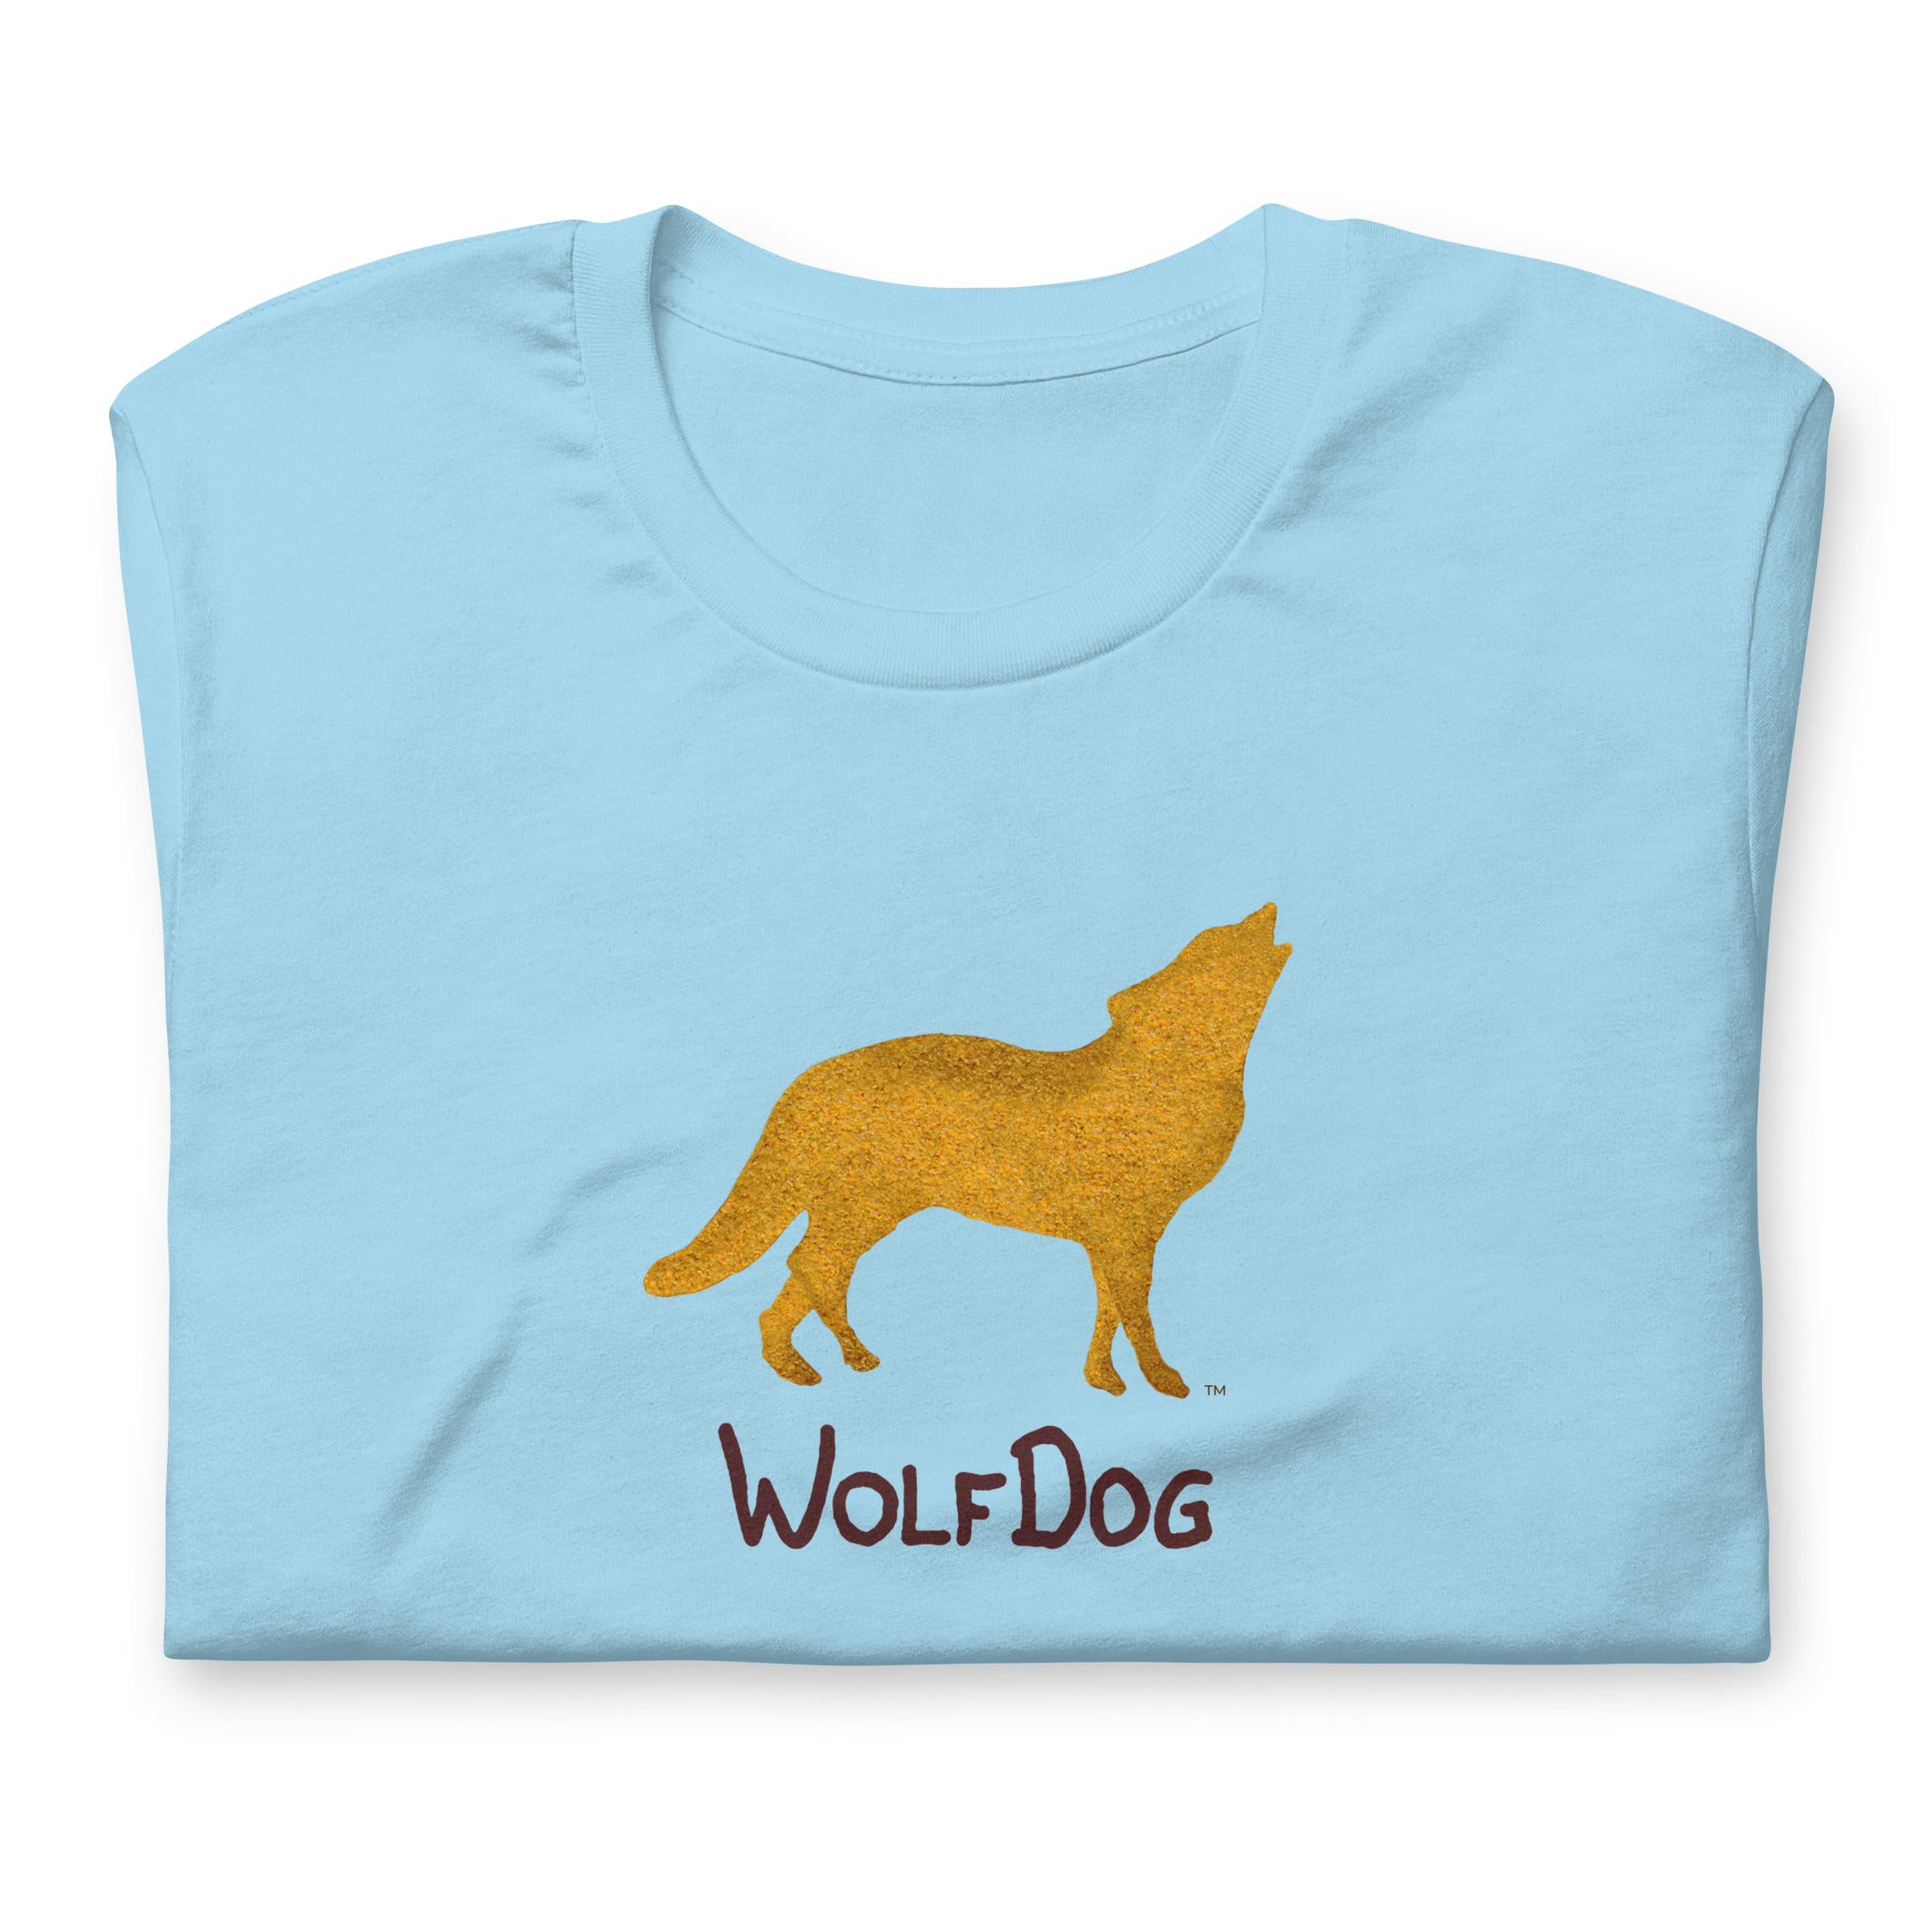 WolfDog - Men's T-Shirt